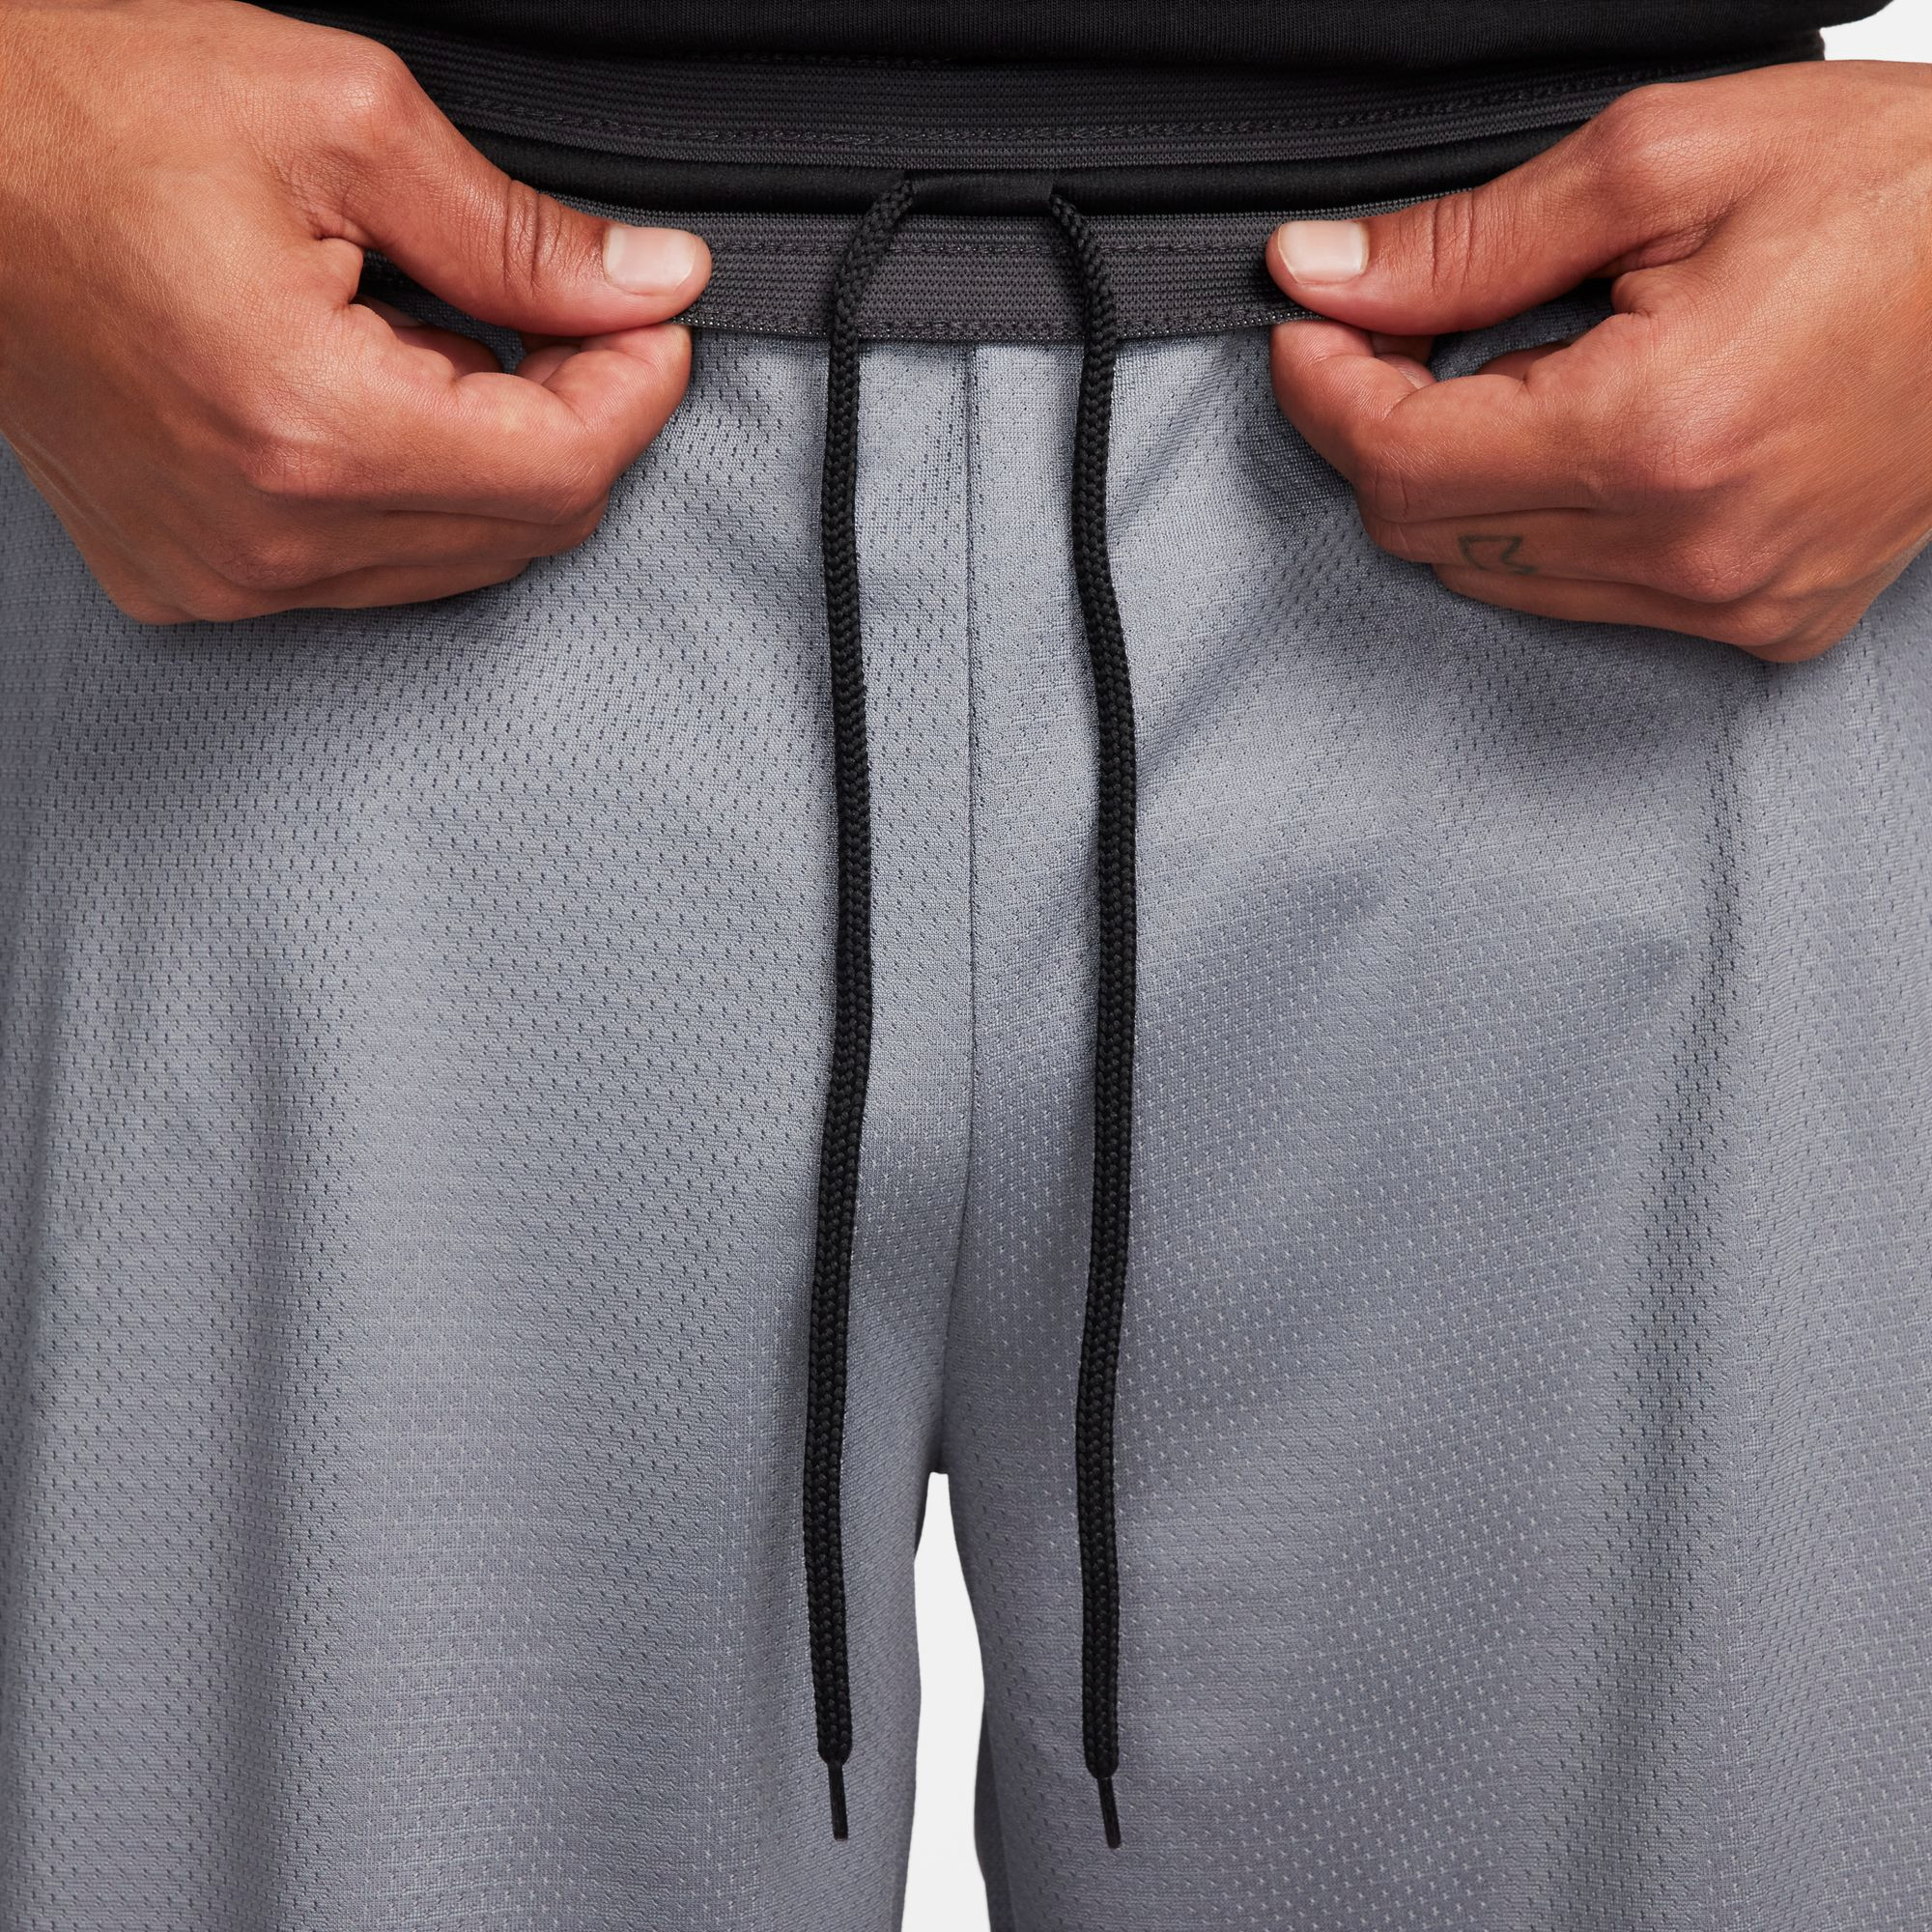 Nike Dri-FIT DNA 8 Inch Shorts